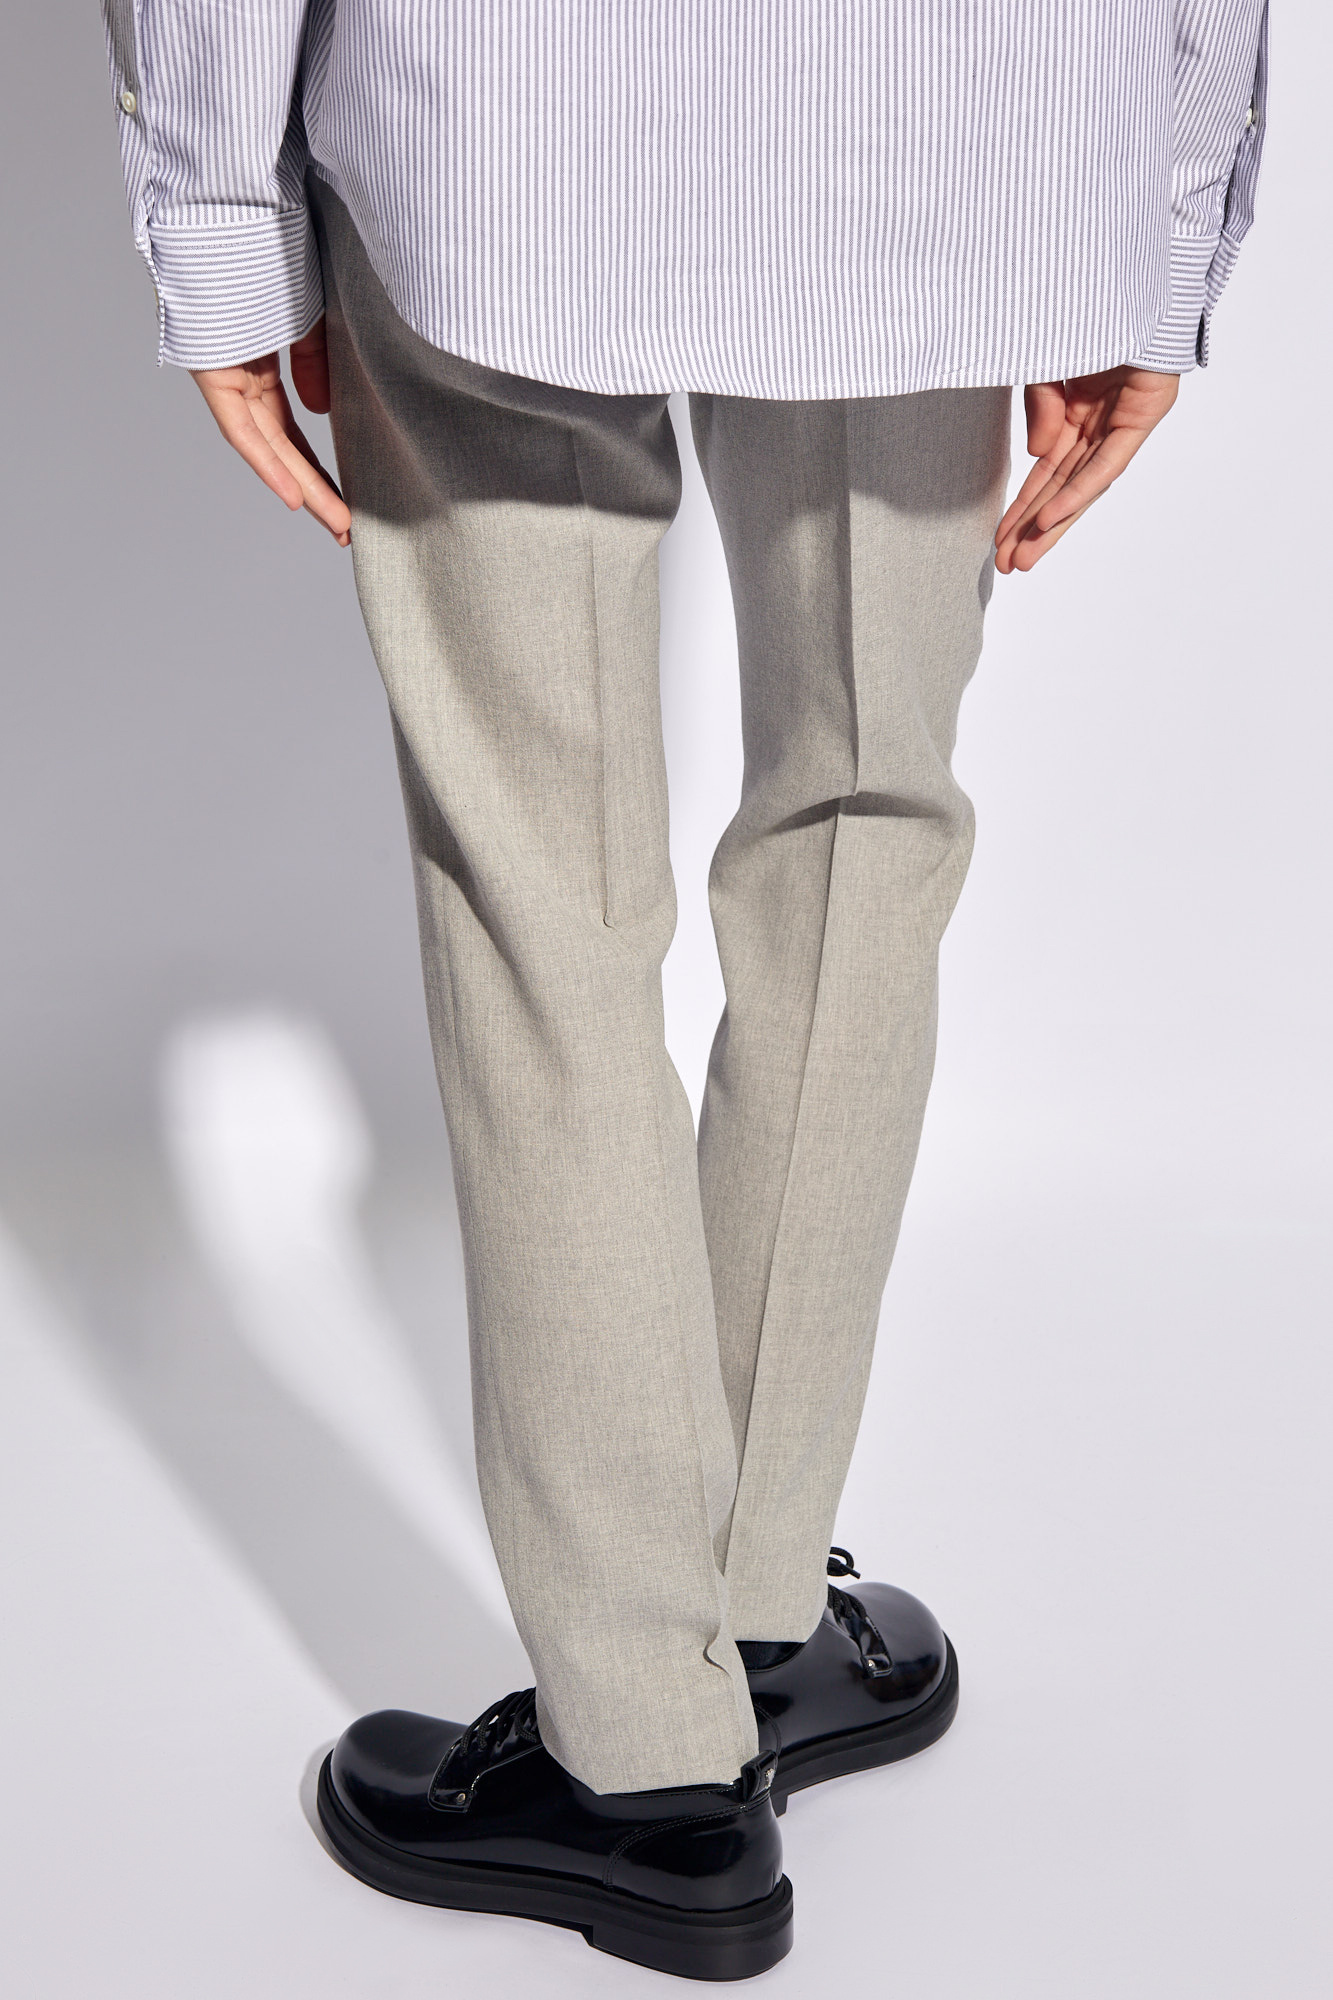 Jeans Aus Baumwolldenim carnation Pleat-front trousers